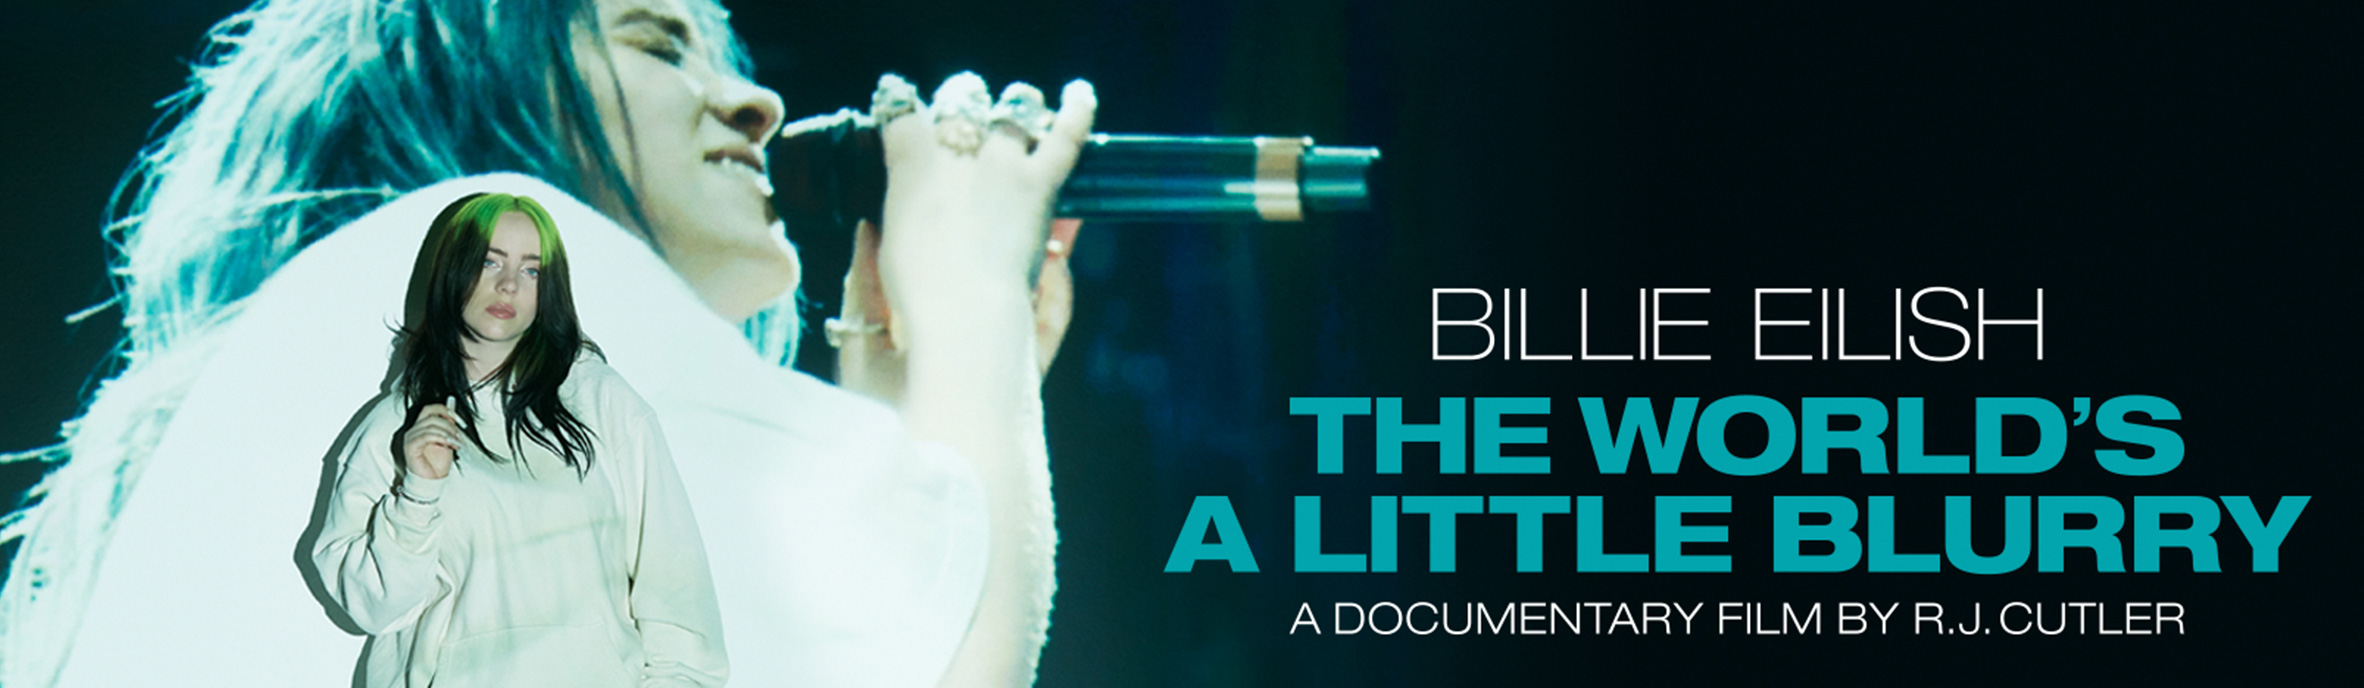 Billie Eilish Documentary Gets 2021 Release Date on Apple TV+